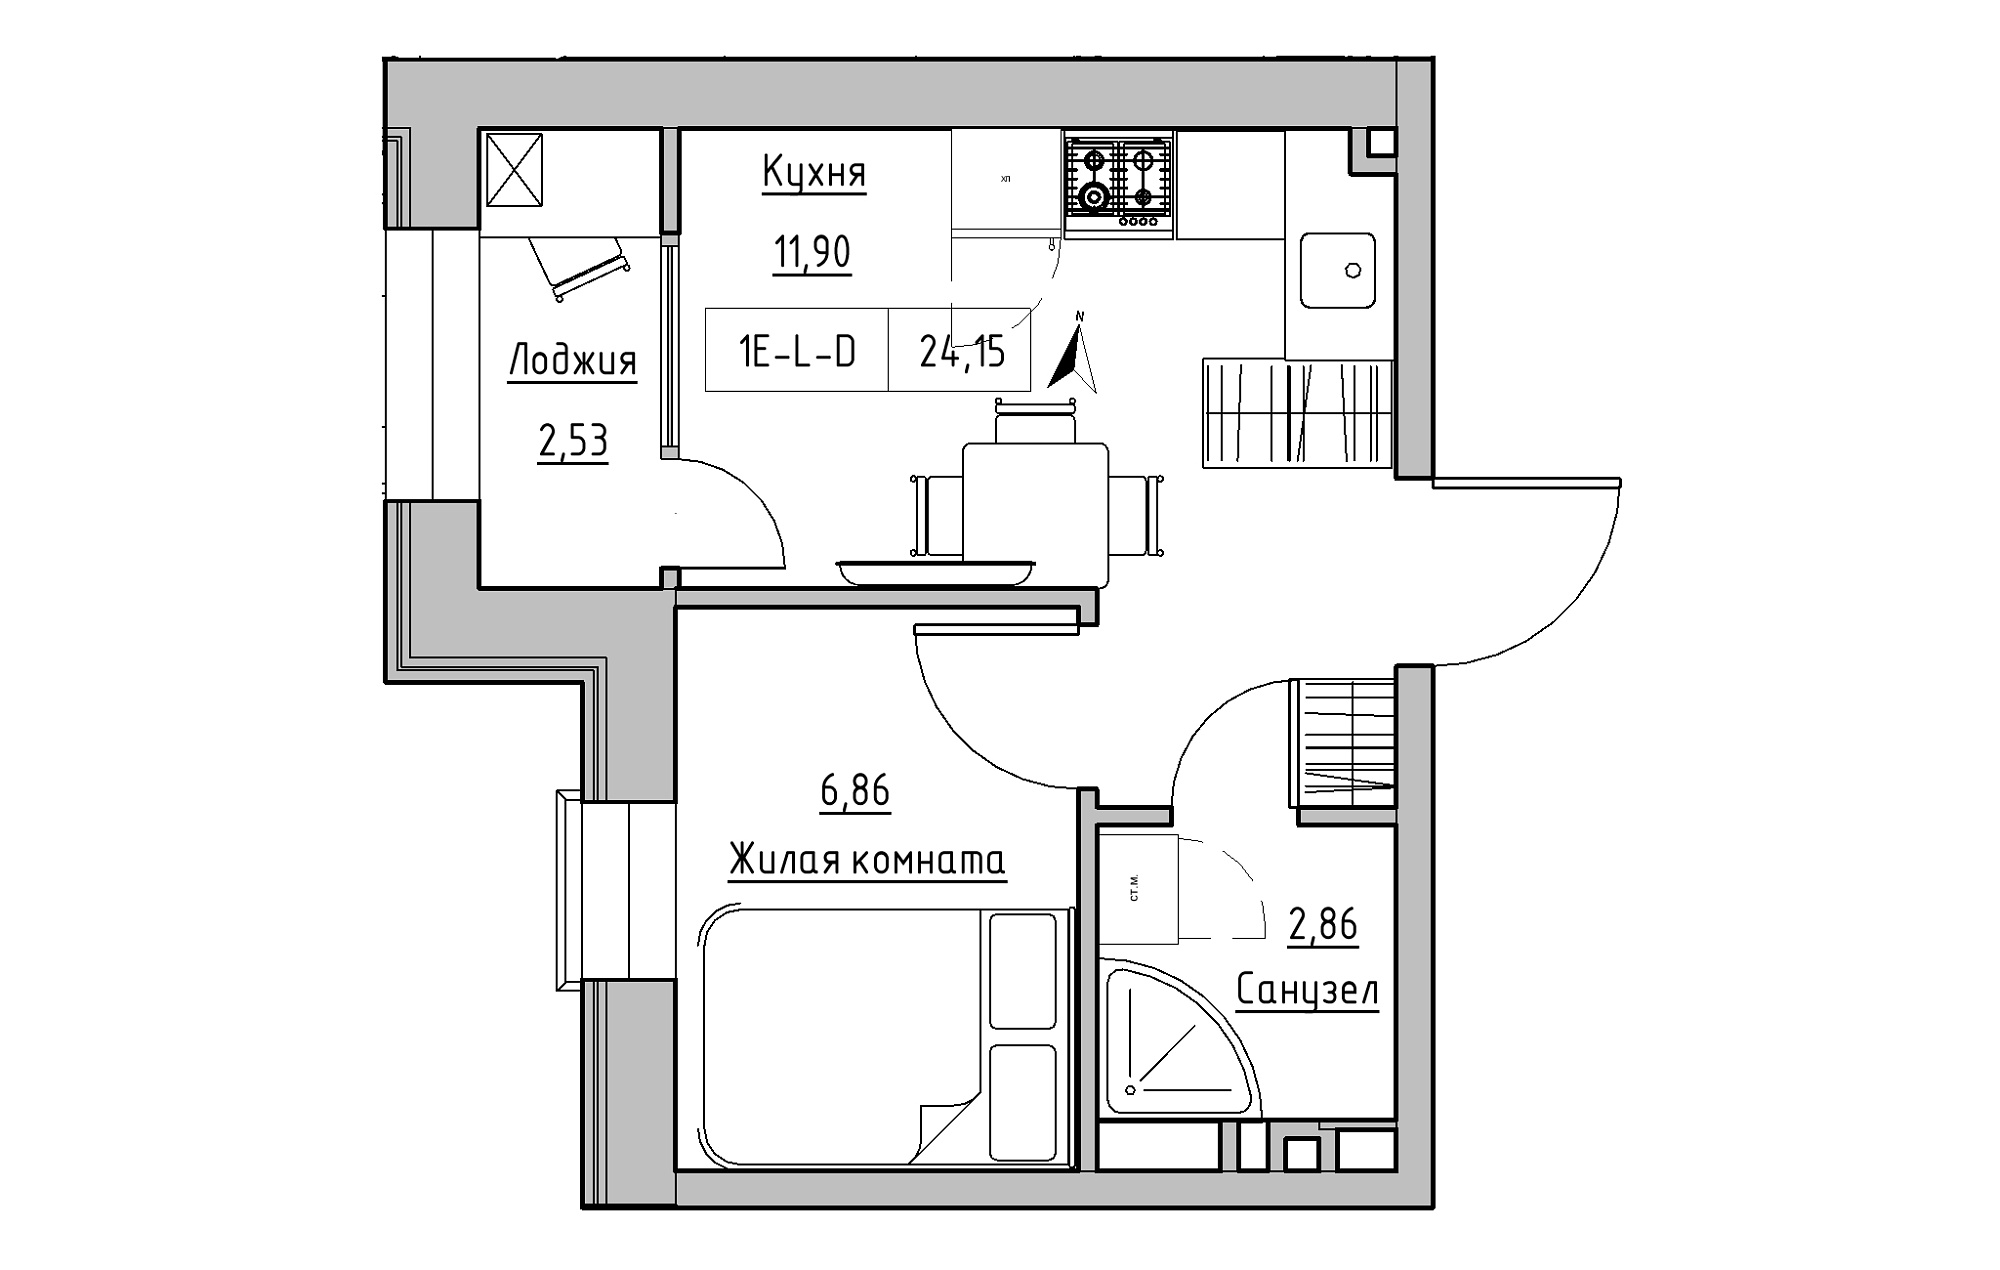 Planning 1-rm flats area 24.15m2, KS-019-04/0001.